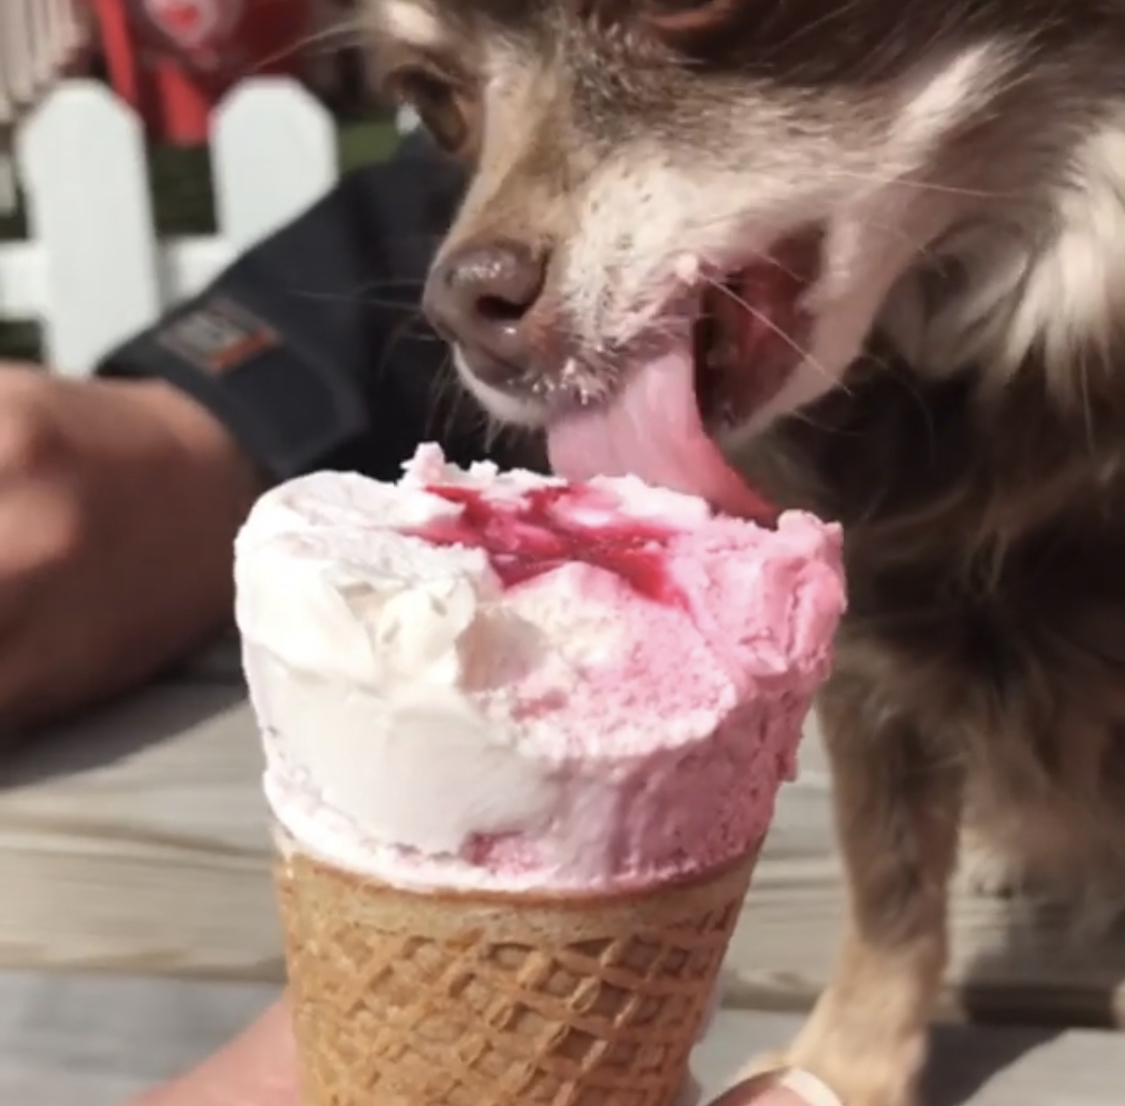 A Chihuahua licking an icecream in a cone